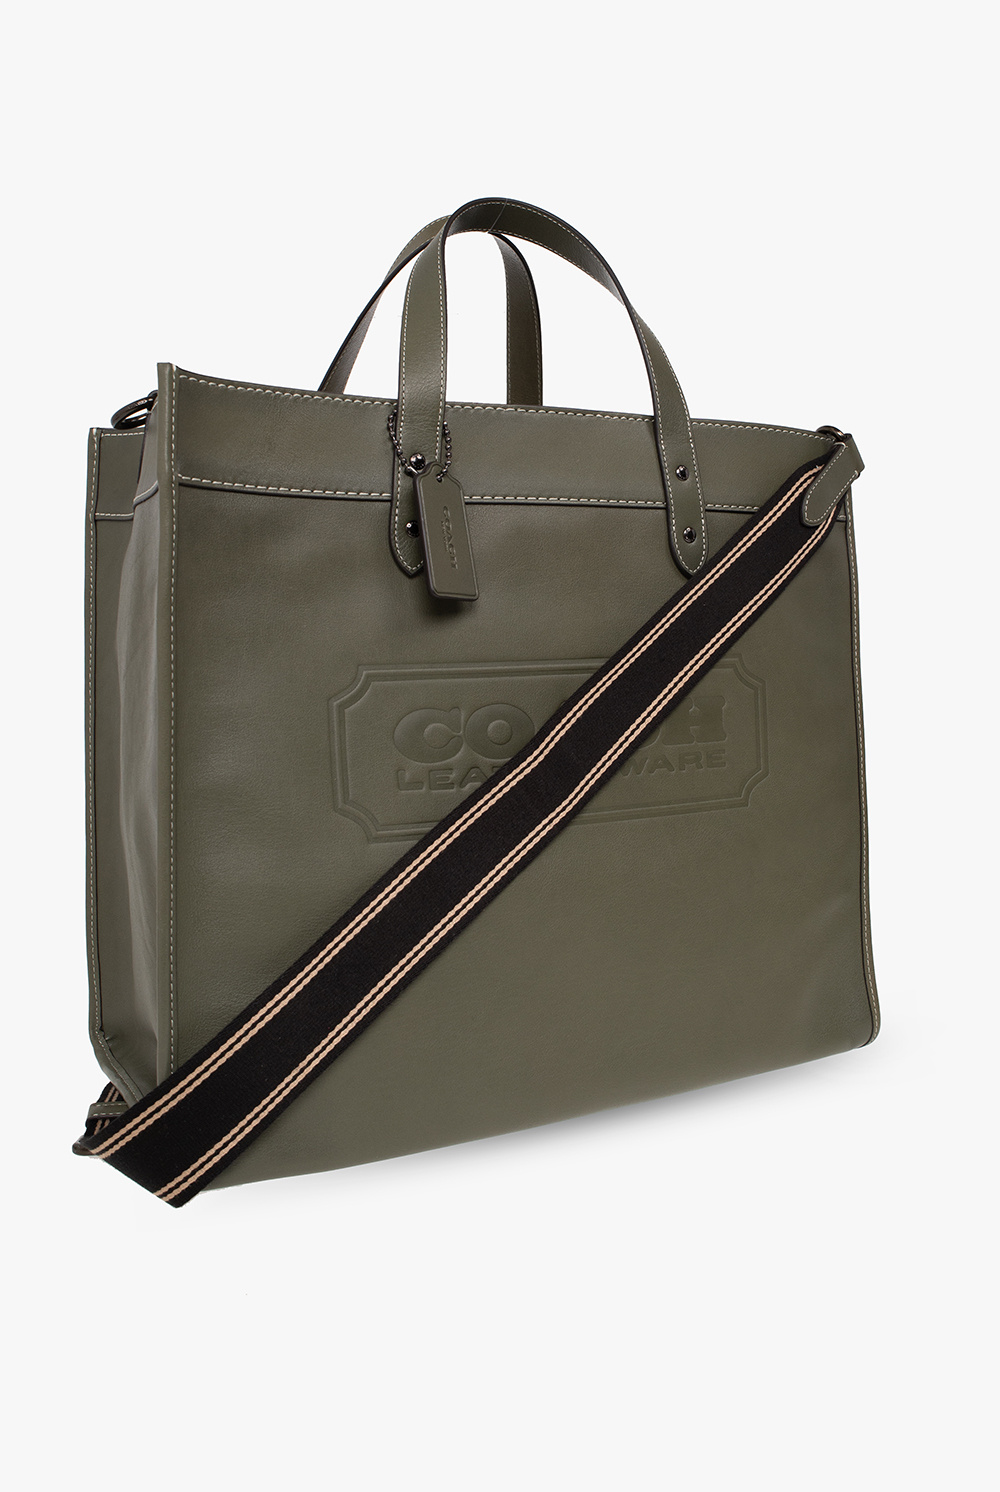 Coach ‘Field 40’ shopper bag